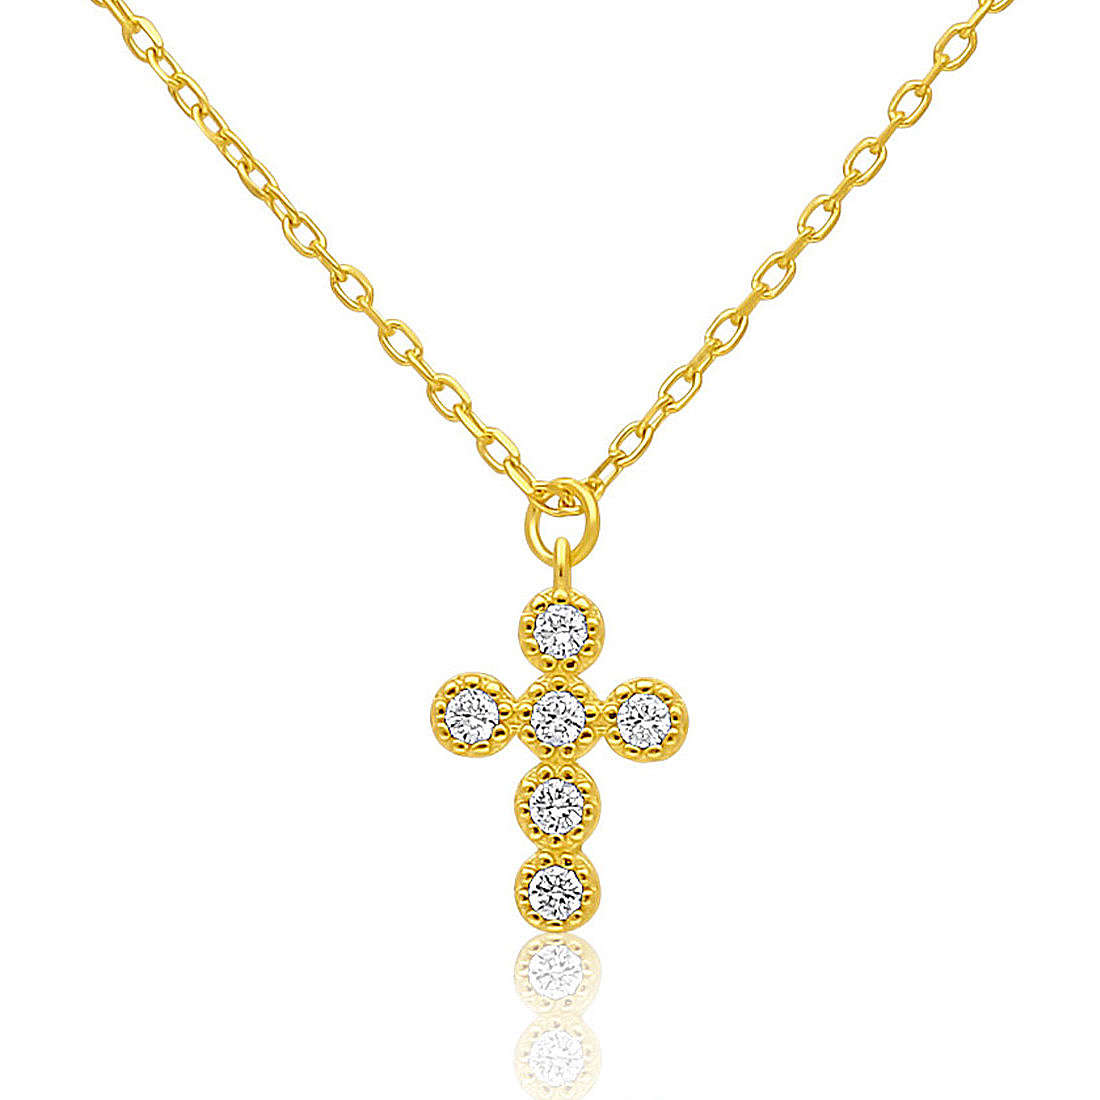 necklace woman jewellery GioiaPura ST65536-02OR